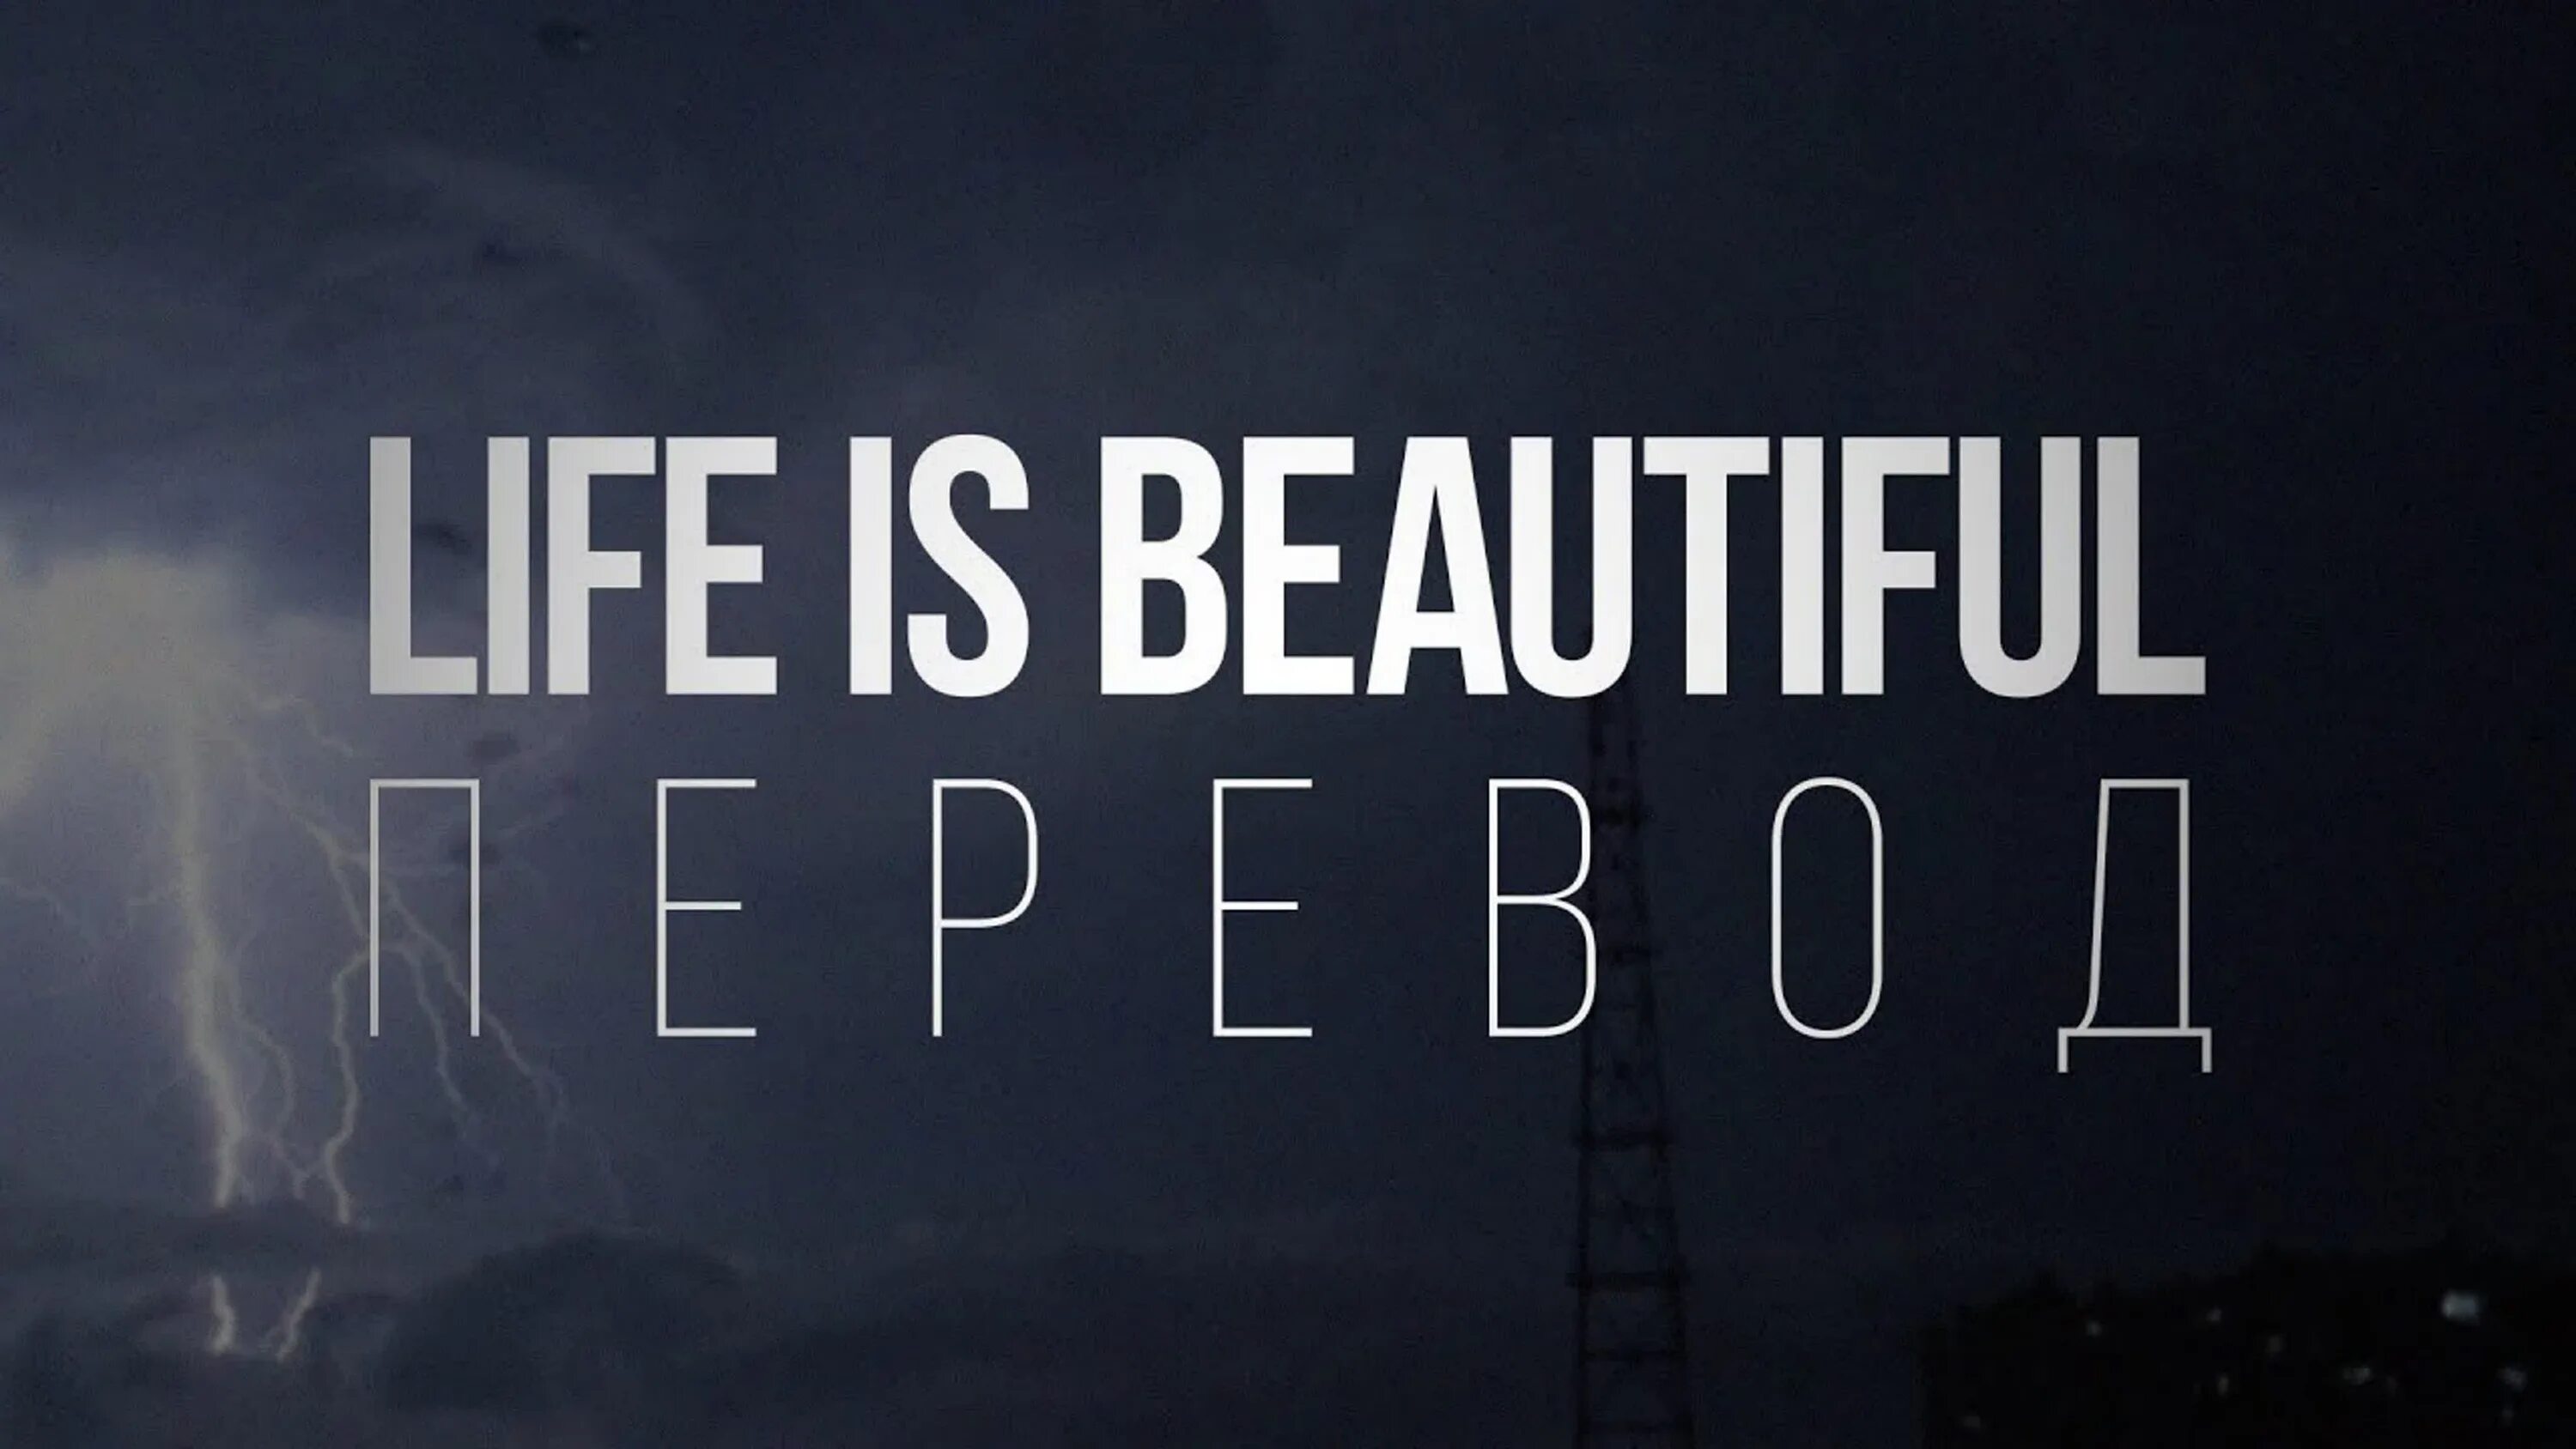 Переведи is beautiful. Life is beautiful перевод. Lil Peep Life. Лил пип лайф ИС бьютифул. Надпись Life is beautiful Lil Peep.